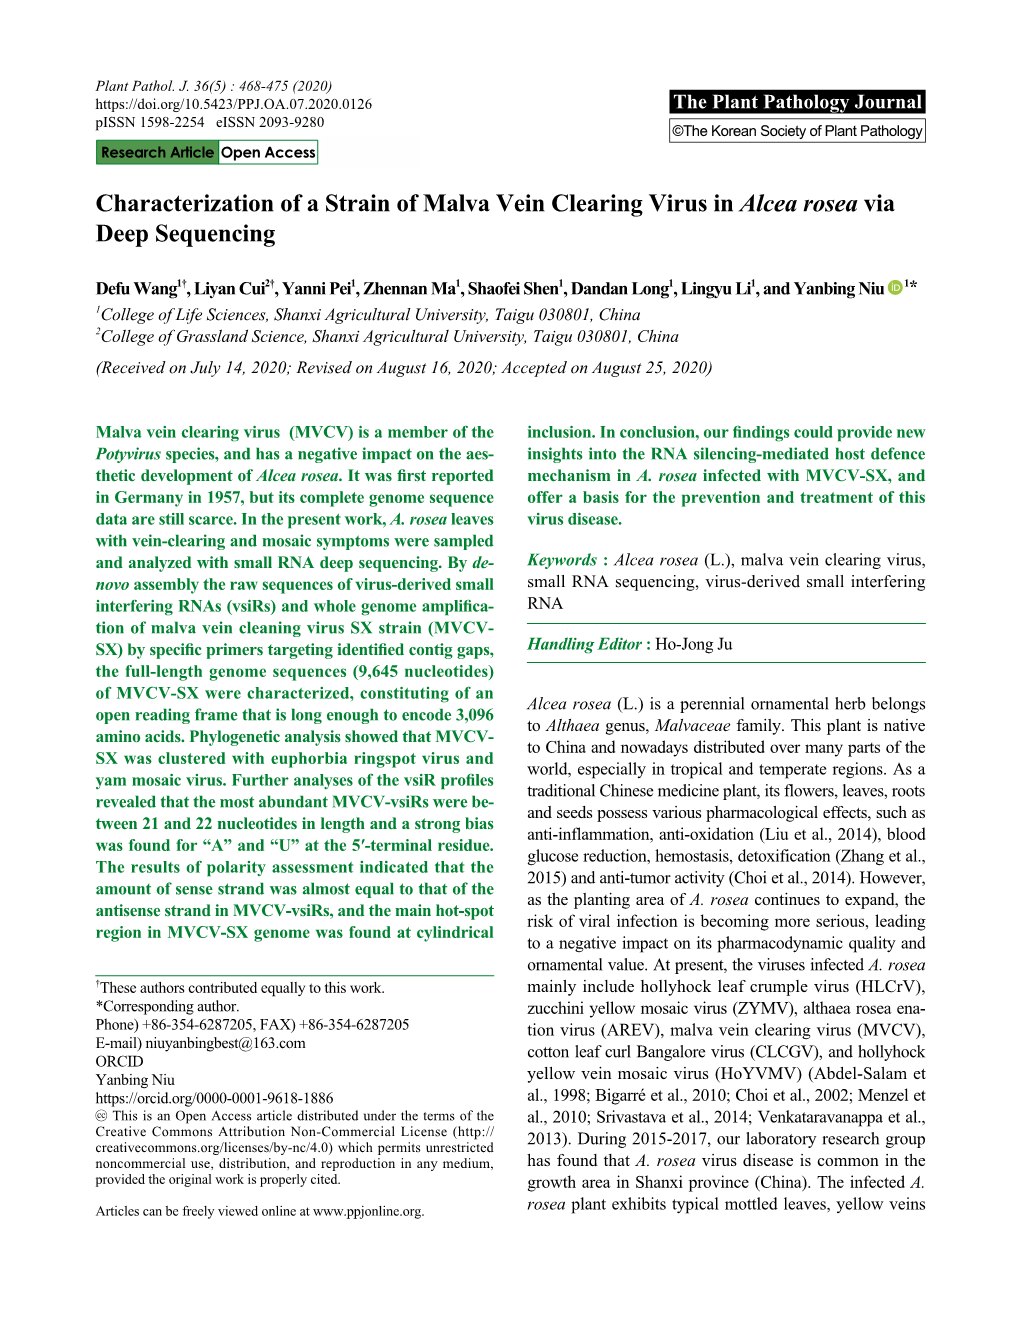 Characterization of a Strain of Malva Vein Clearing Virus in Alcea Rosea Via Deep Sequencing